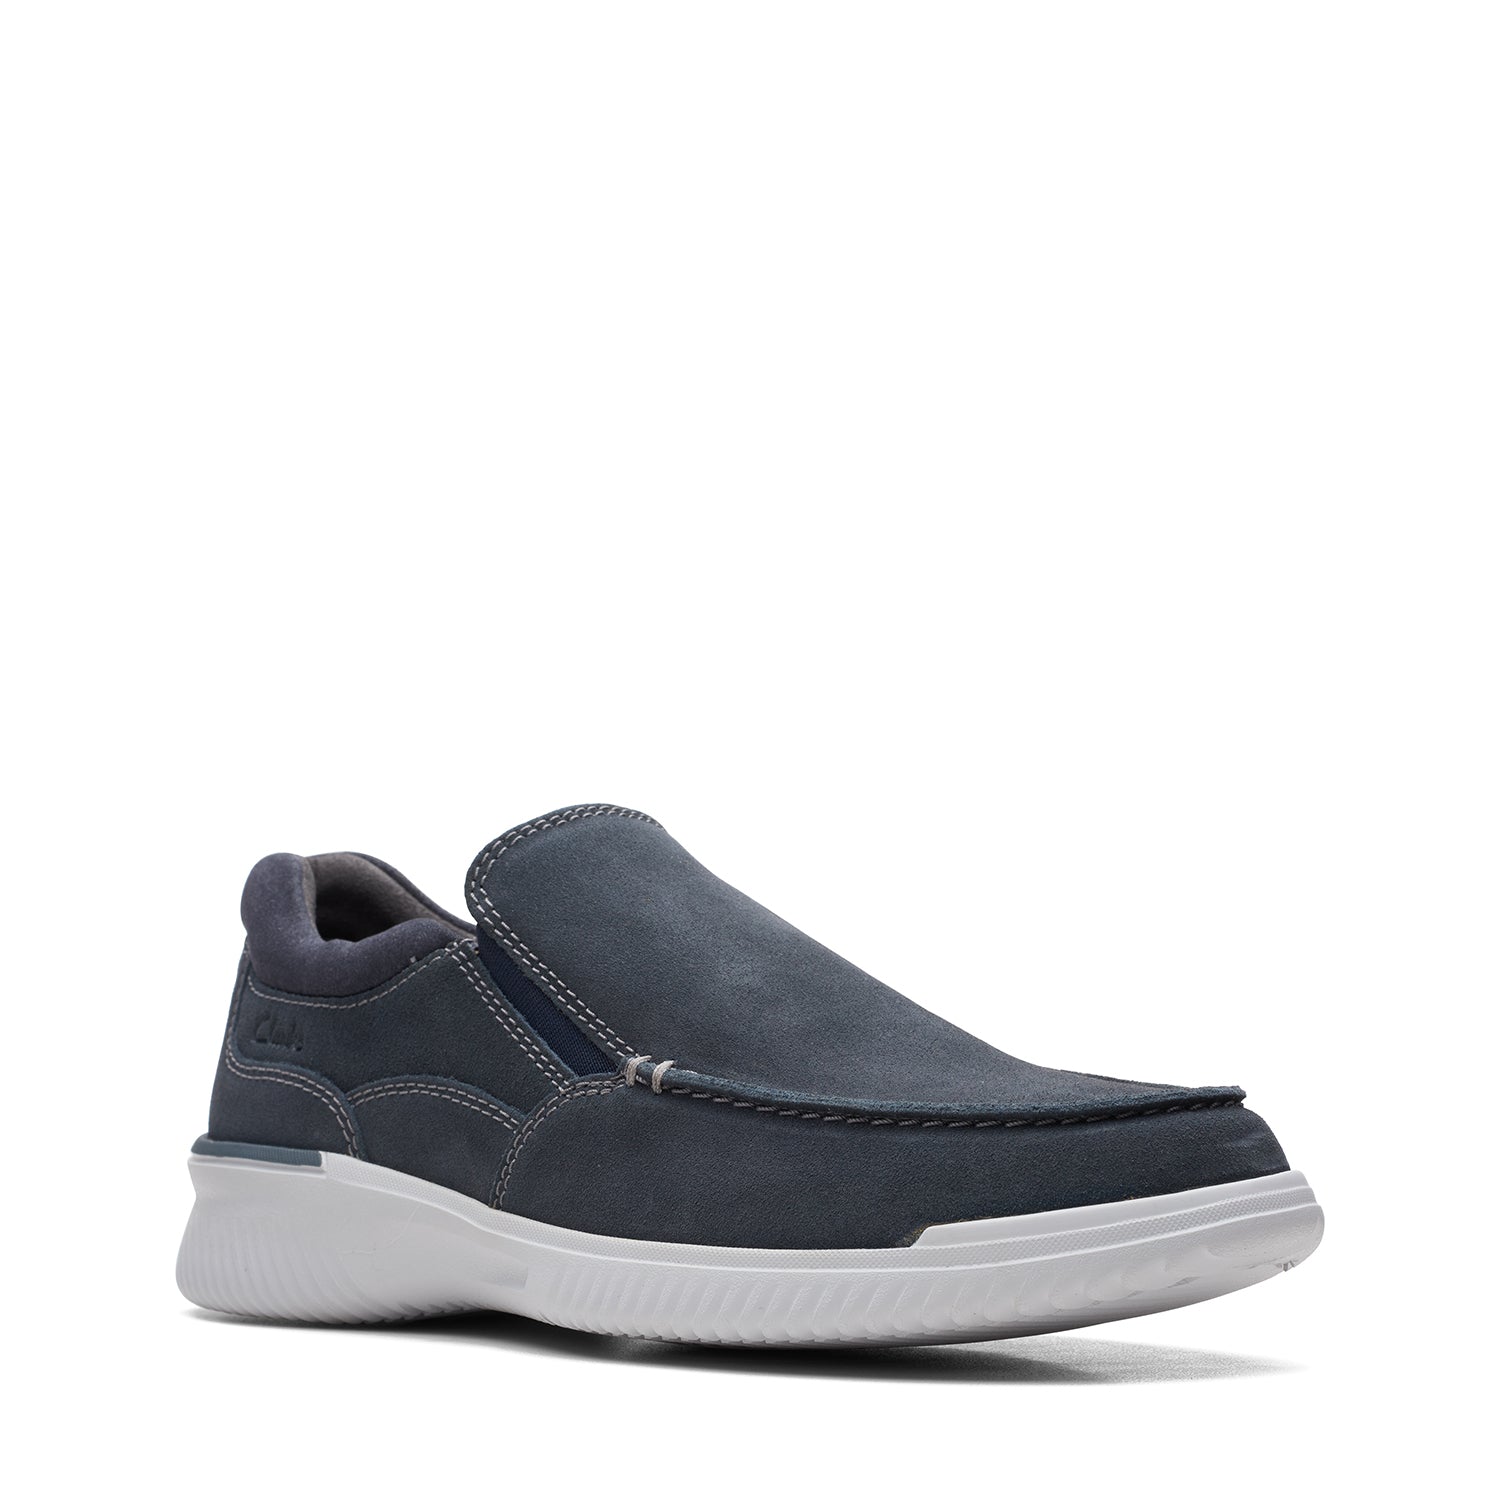 Clarks Donaway Free - Shoes - Navy Waxy - 261659857 - G Width (Standard Fit)